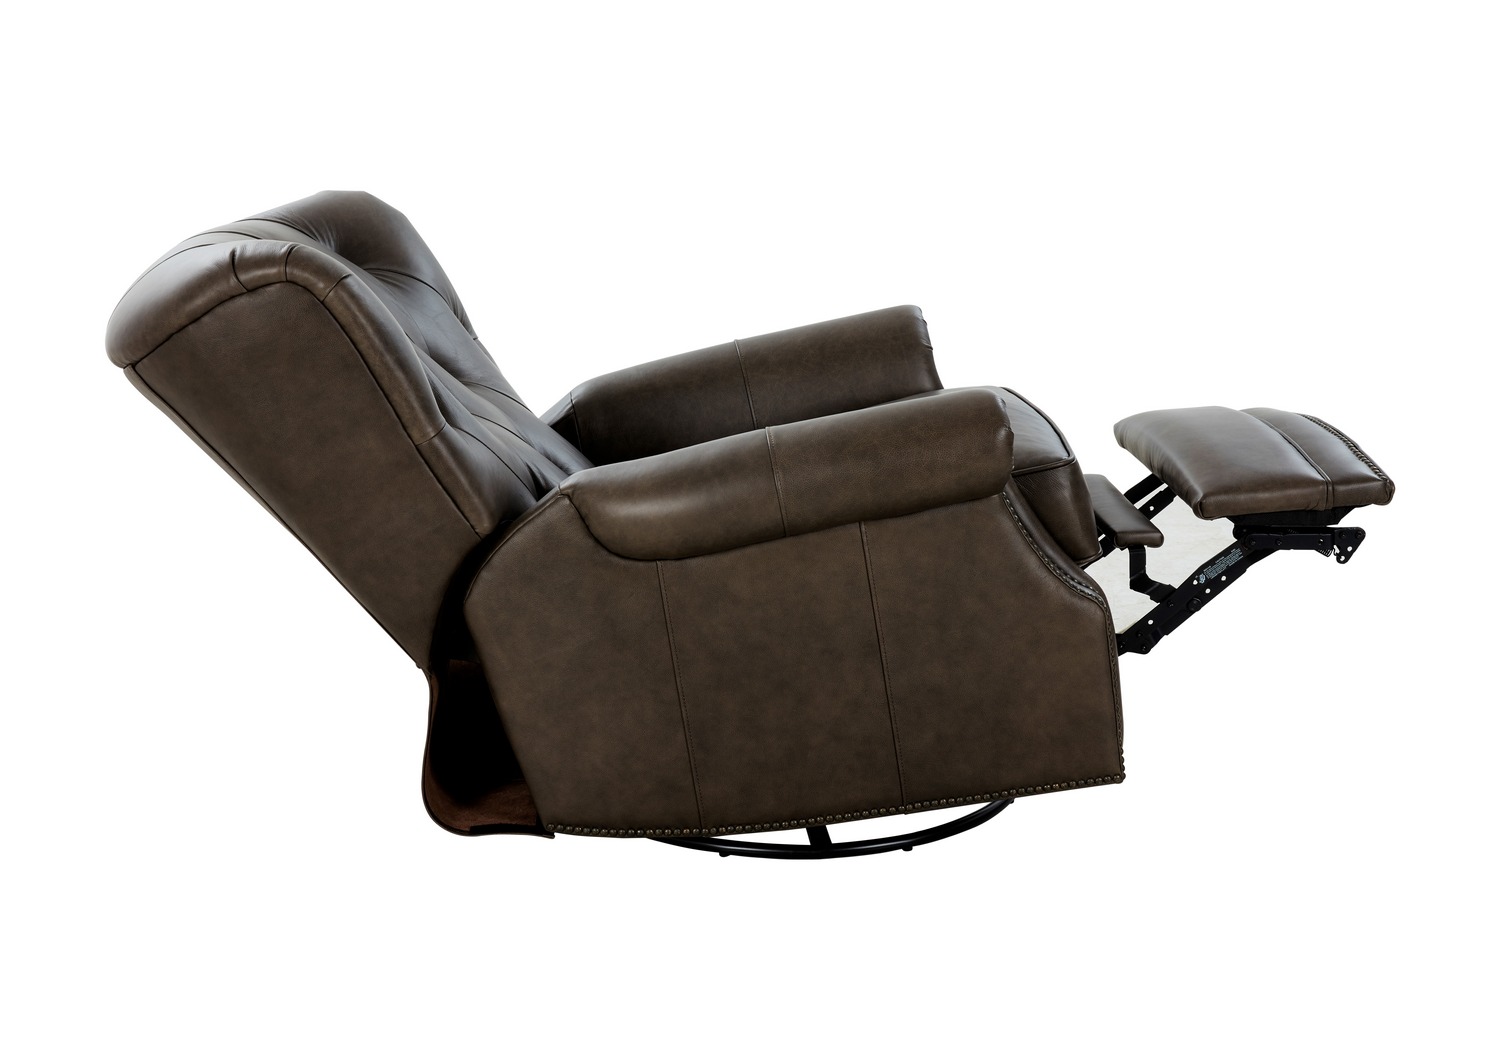 Barcalounger Heritage Power Swivel Glider Recliner Chair - Bennington Fudge/All Leather